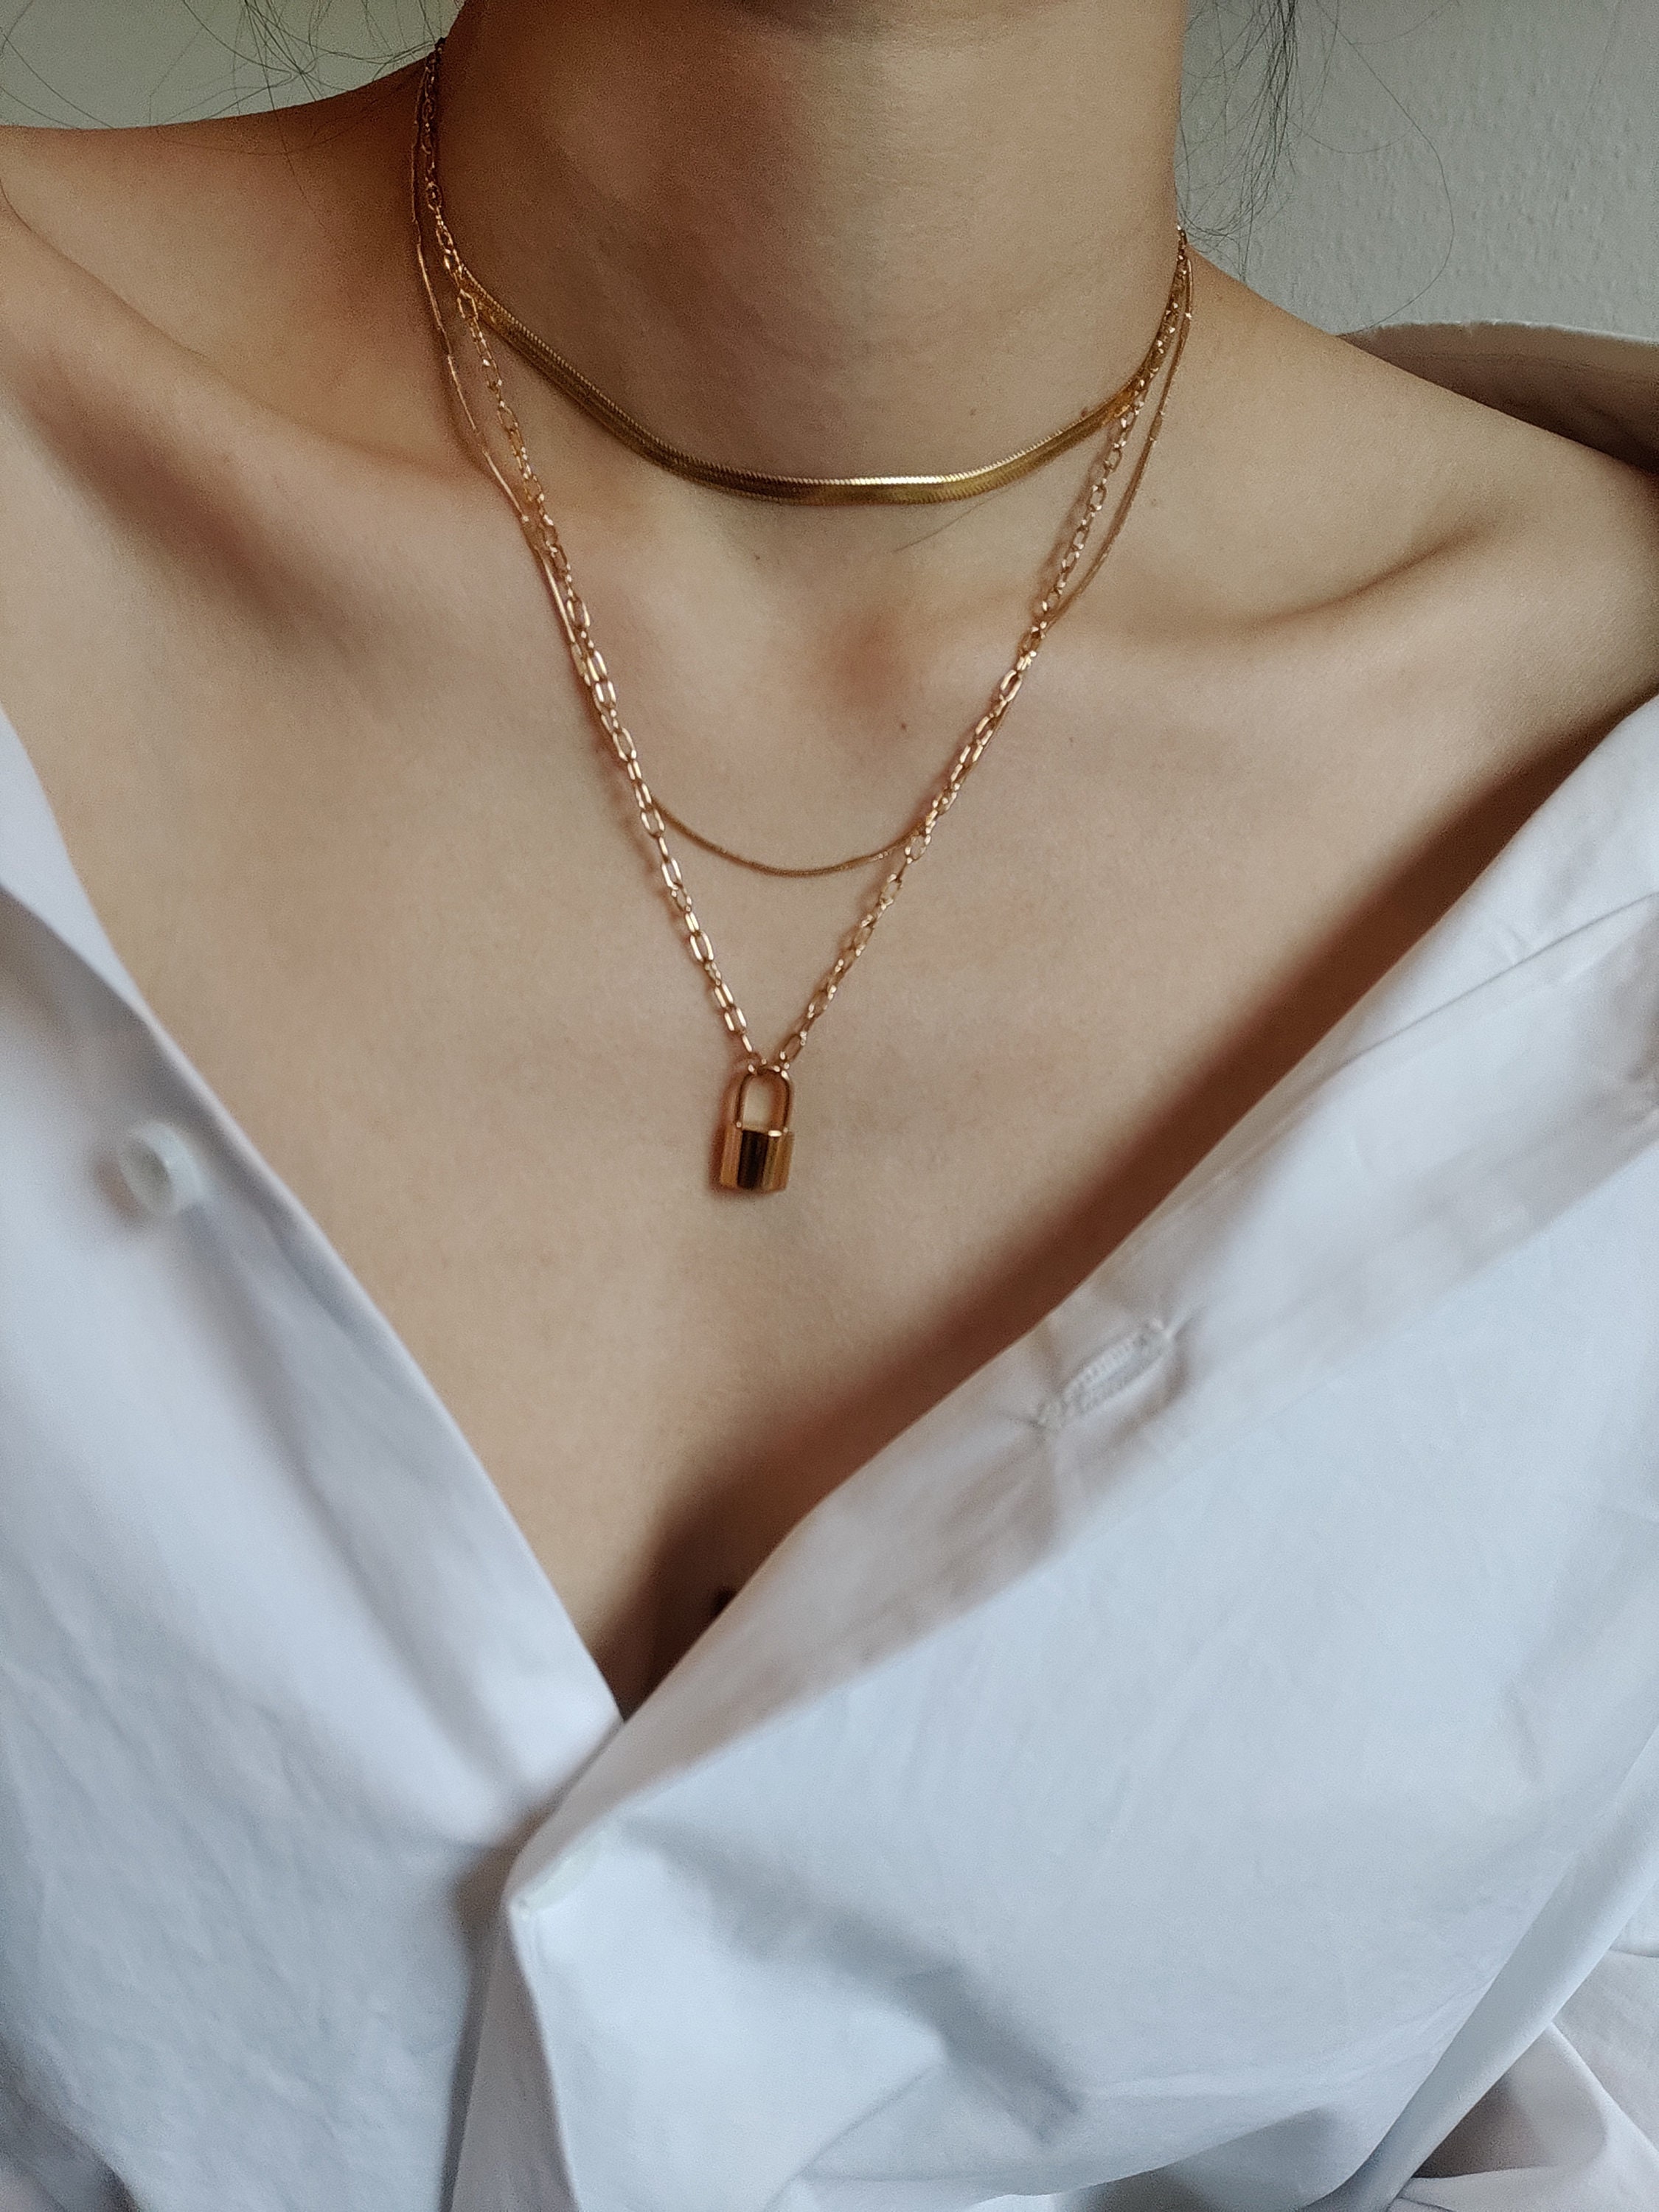 18k Gold Lock Necklace Waterproof Necklace Friendship 